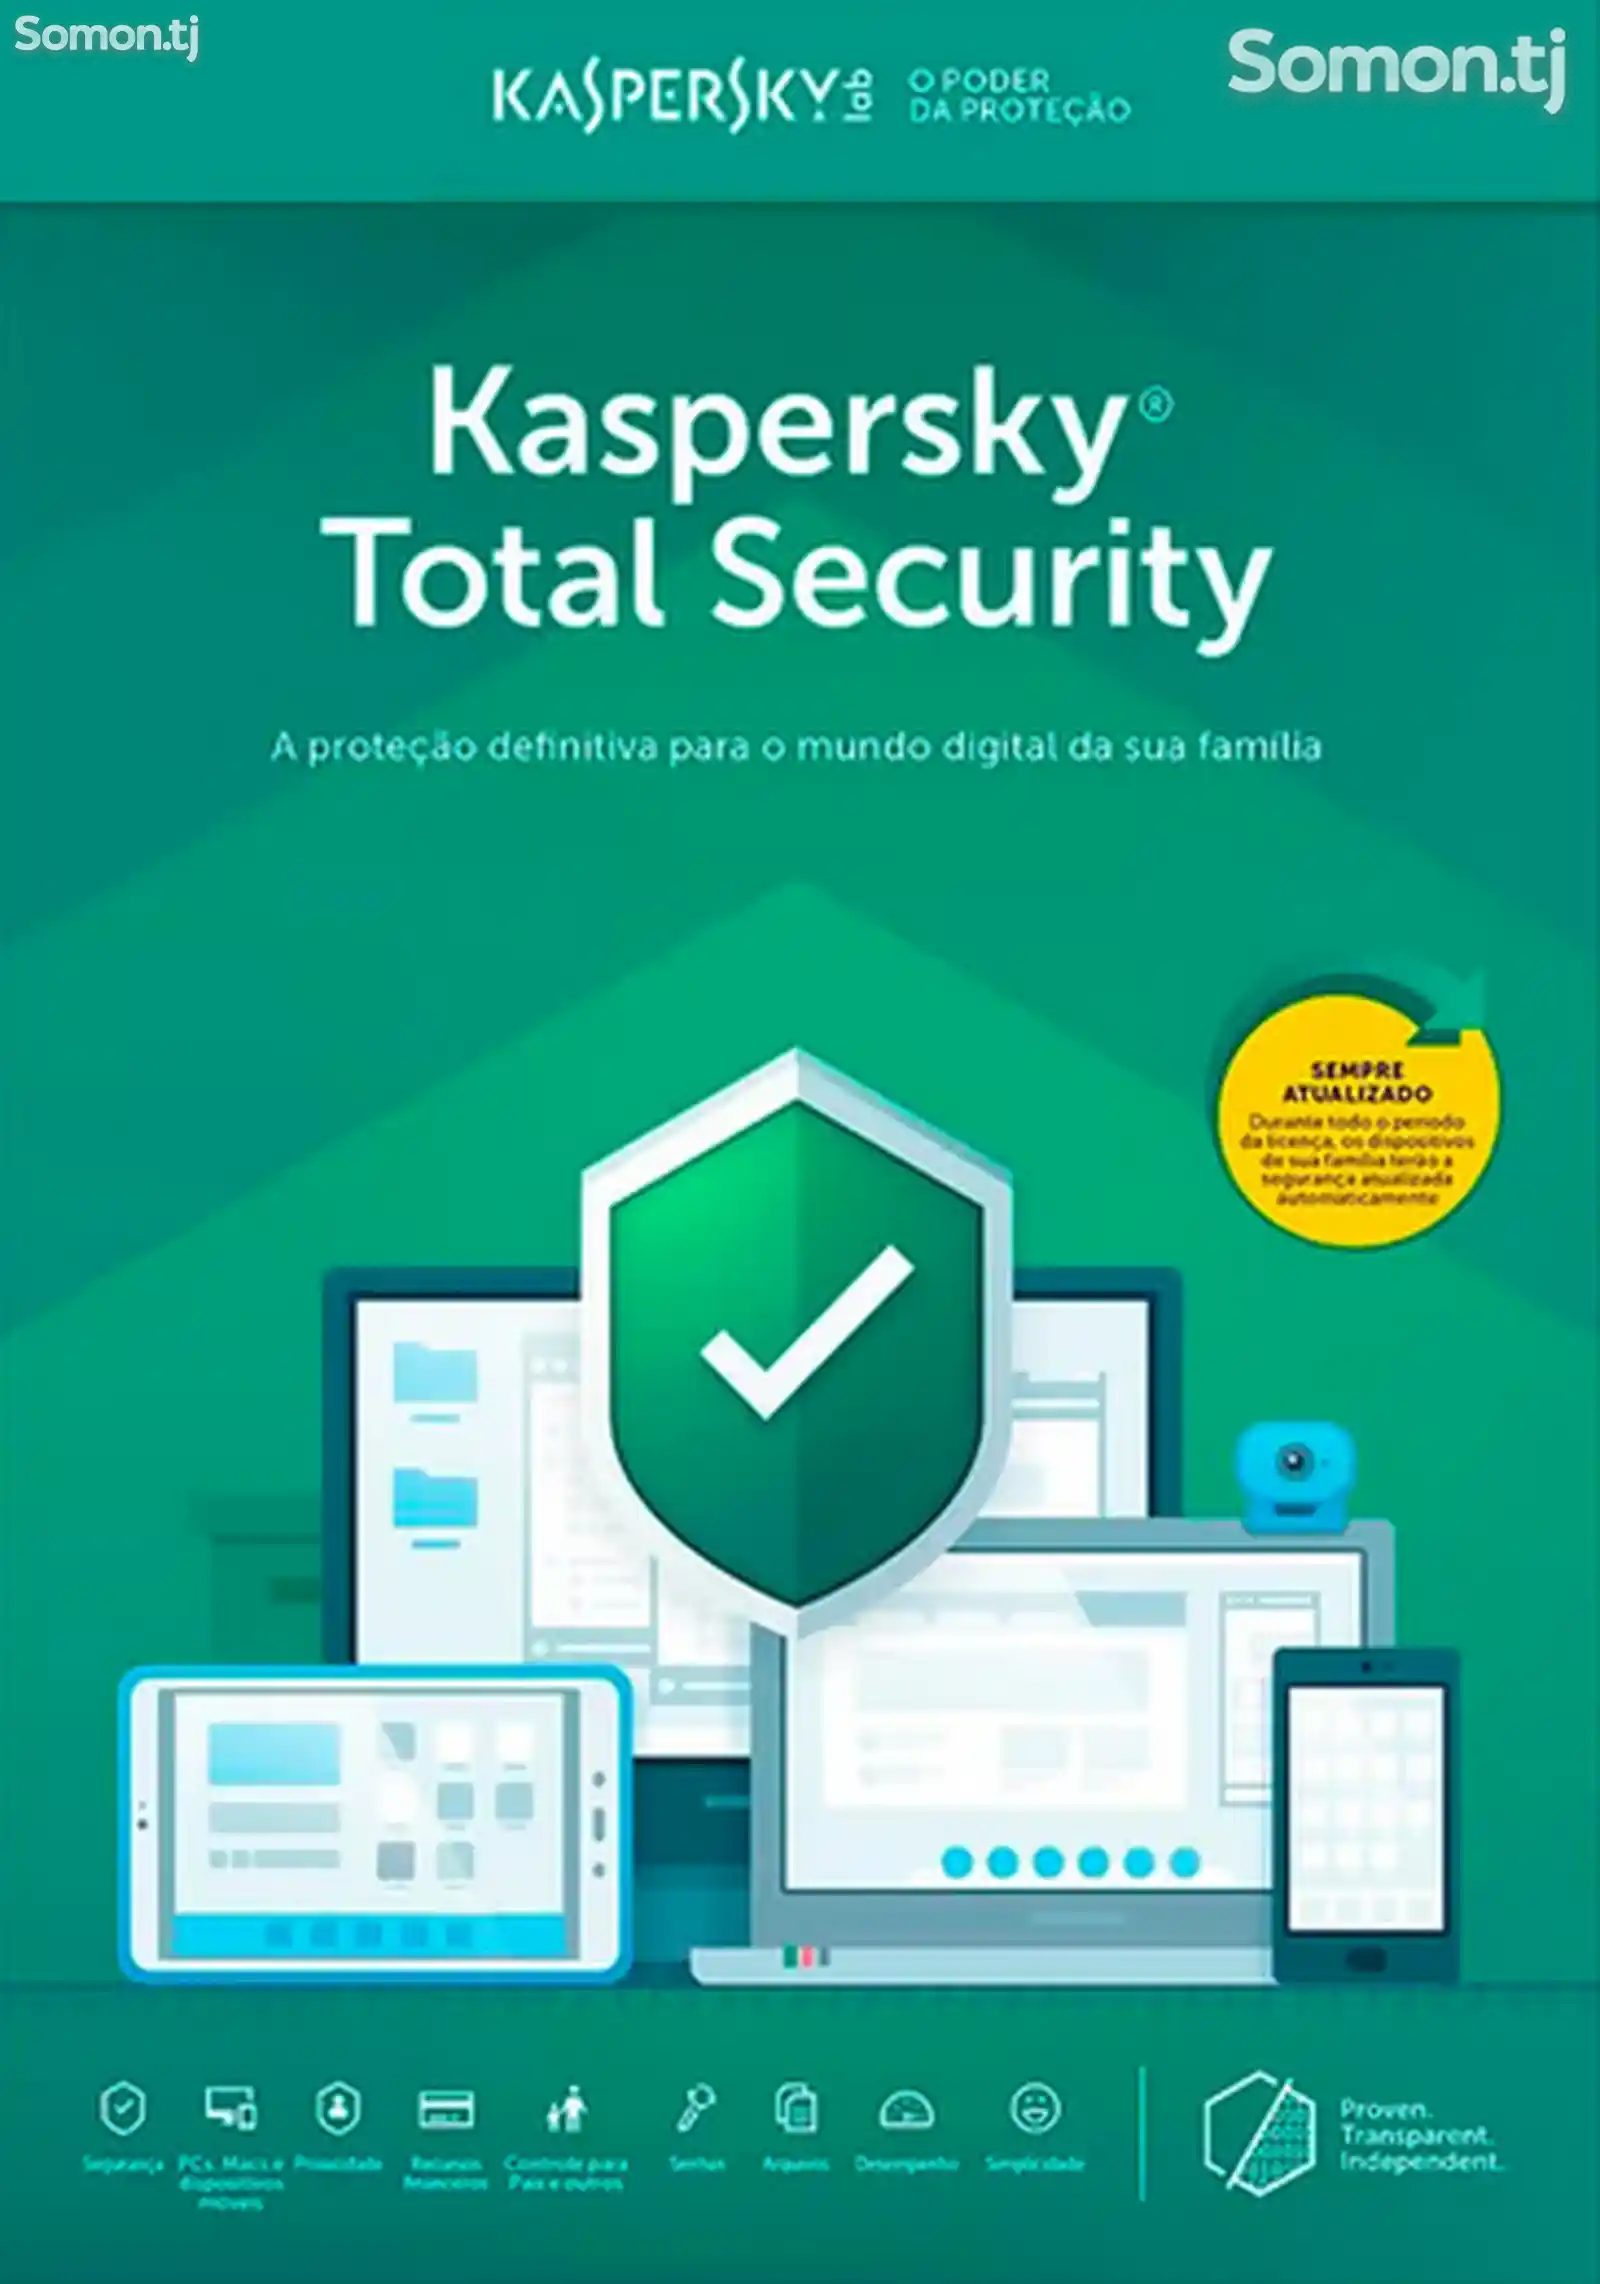 Антивирус Kaspersky Total Security